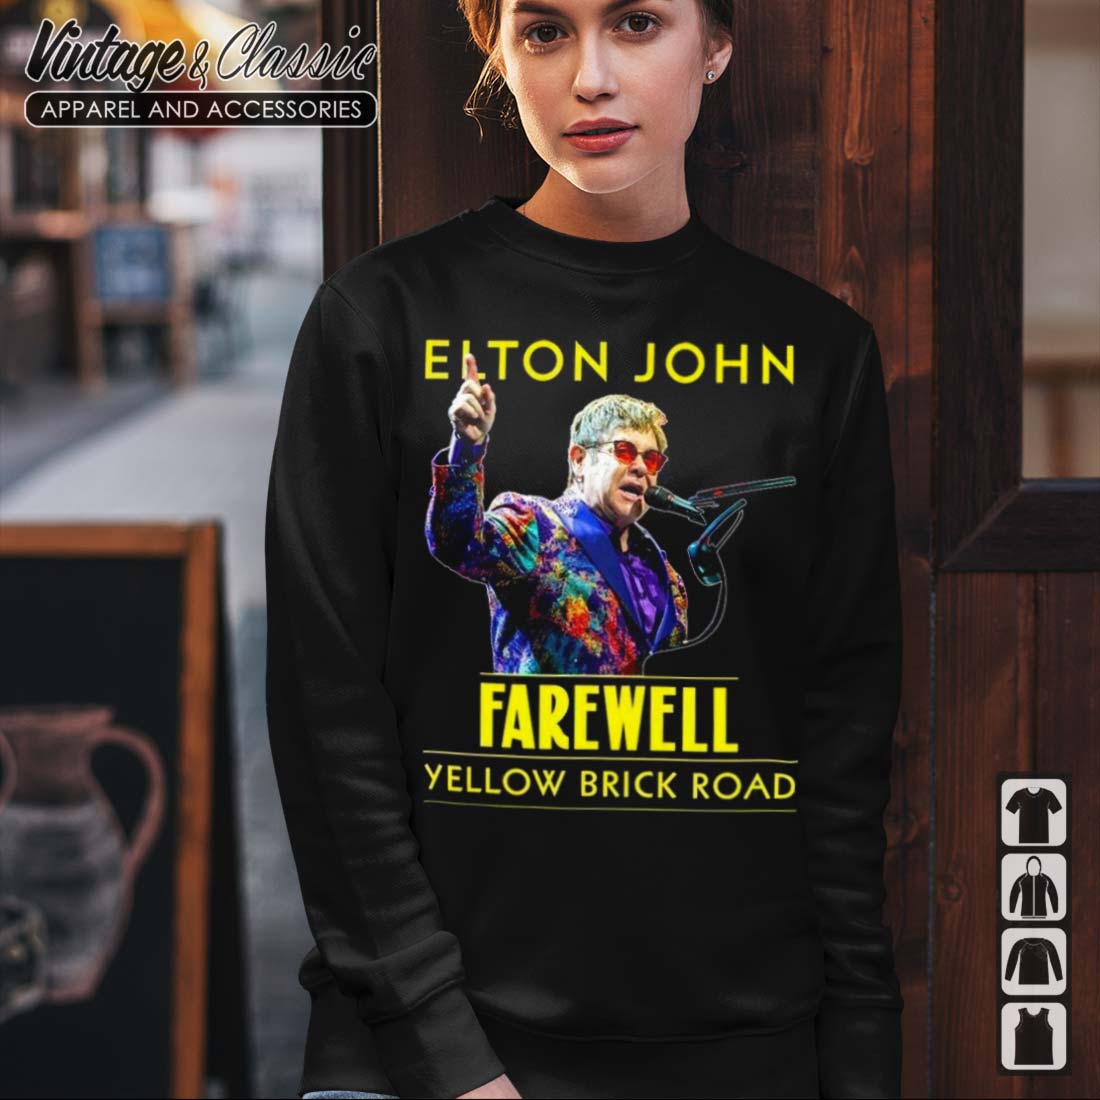 Elton John Farewell Tour Farewell Yellow Brick Road Tour 2022 T-shirt - Ink  In Action